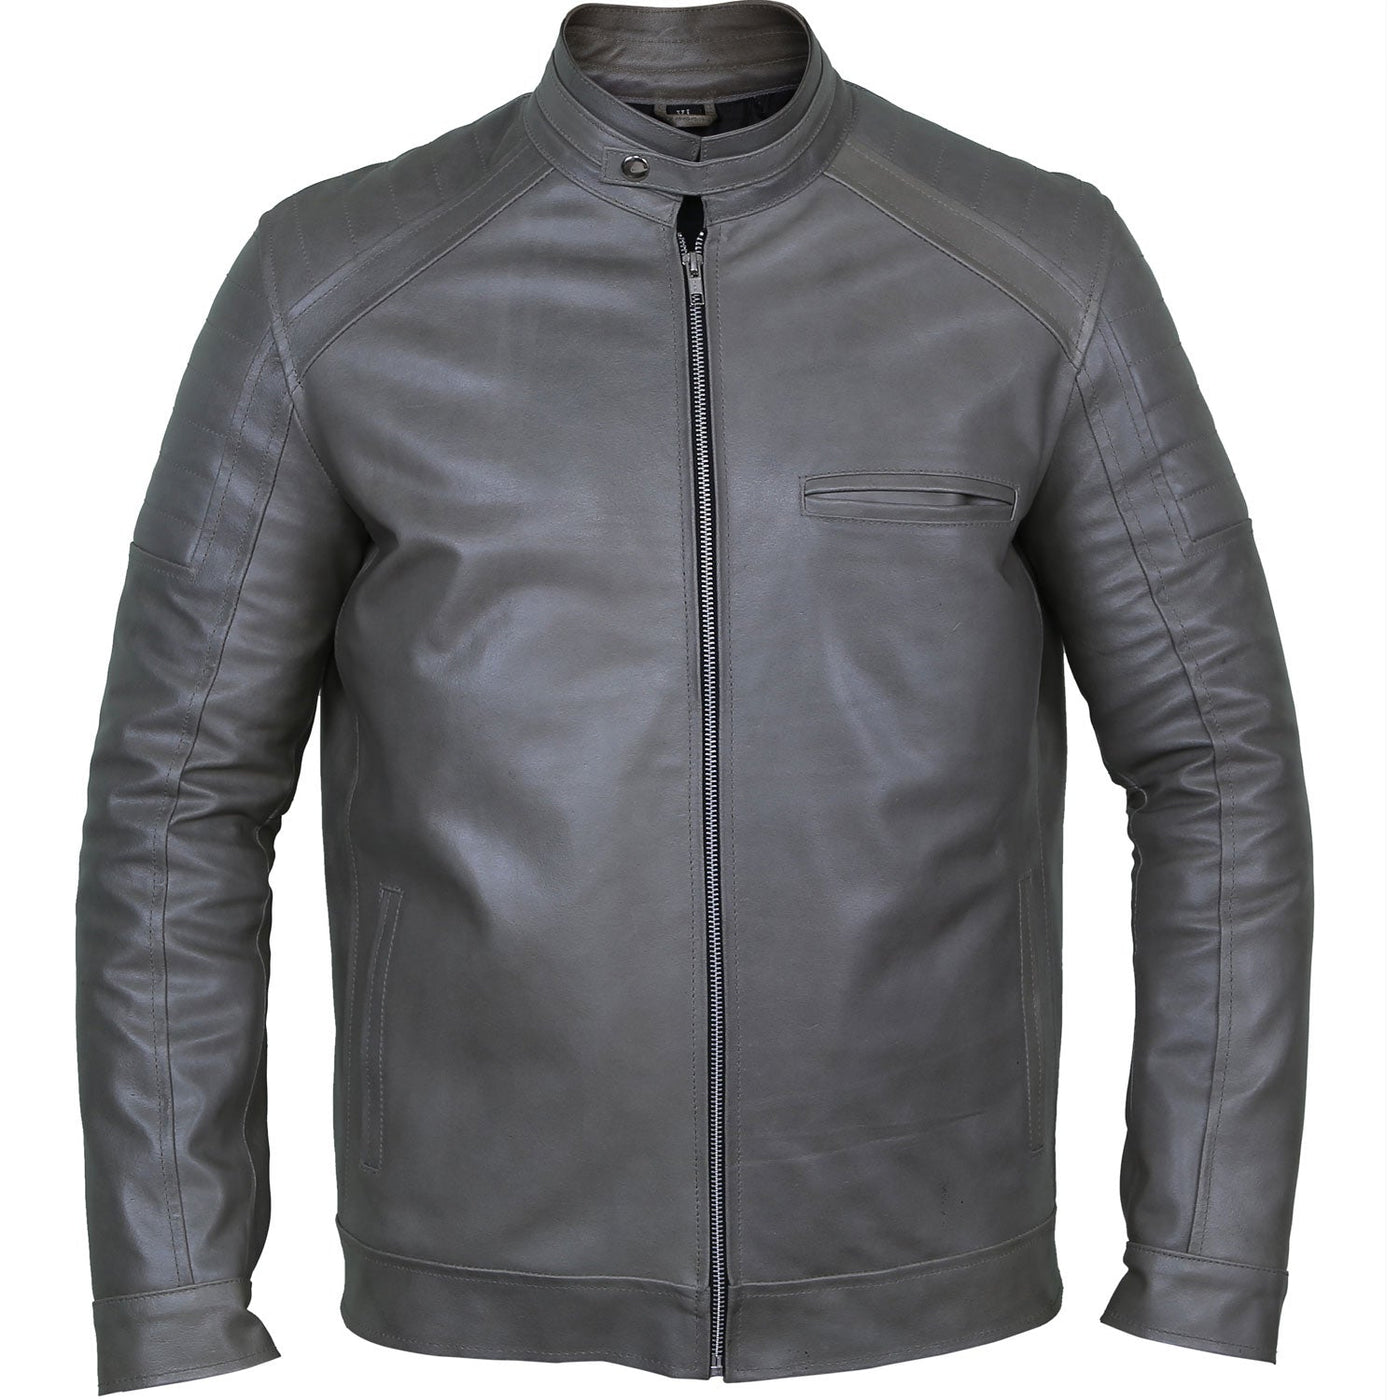 Jackson Grey Leather Biker Jacket Front Pose